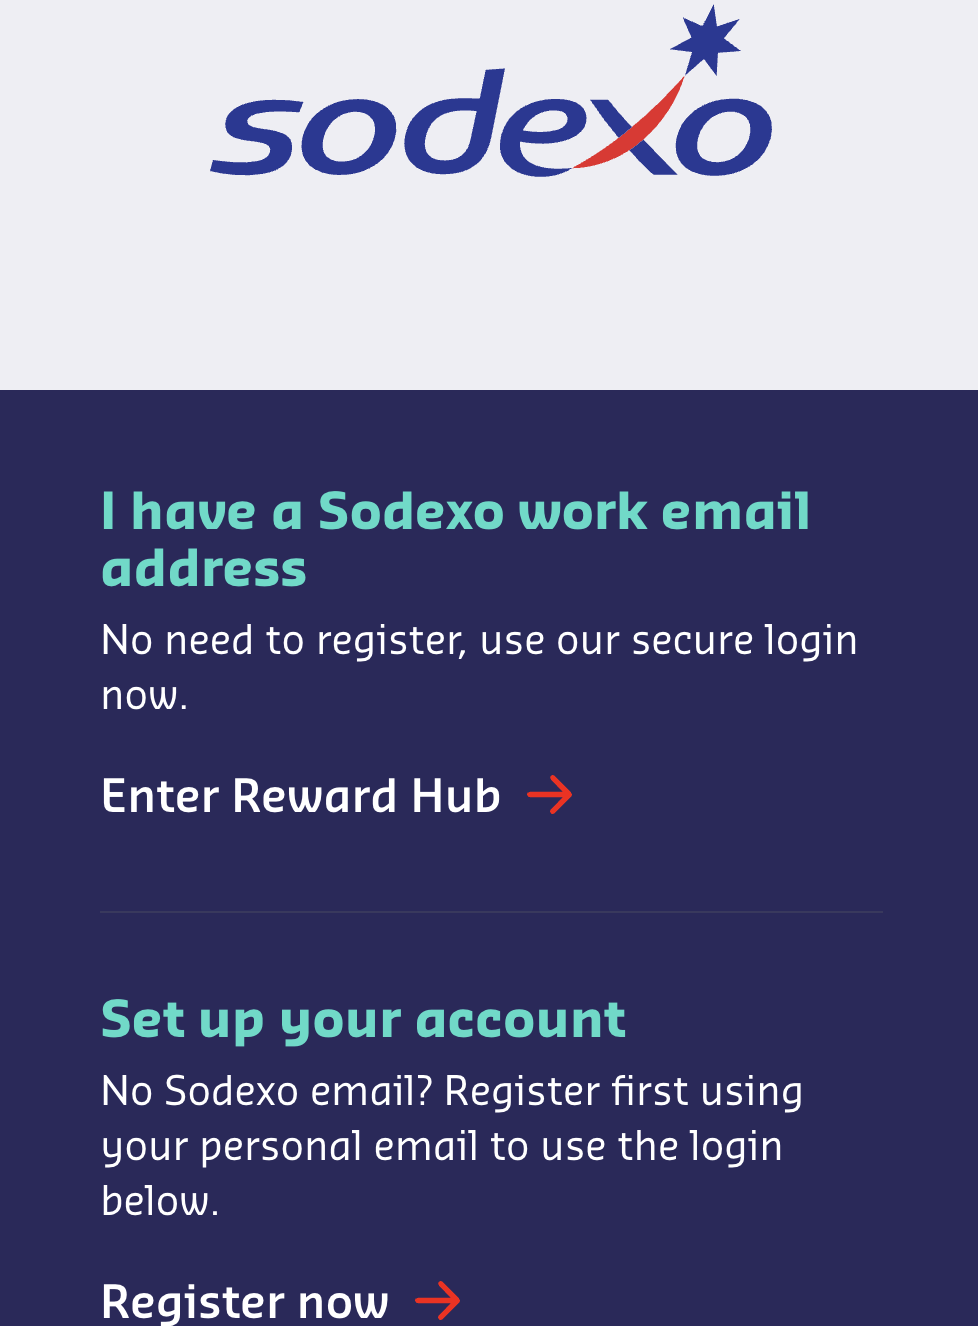 SODEXO Reward Hub